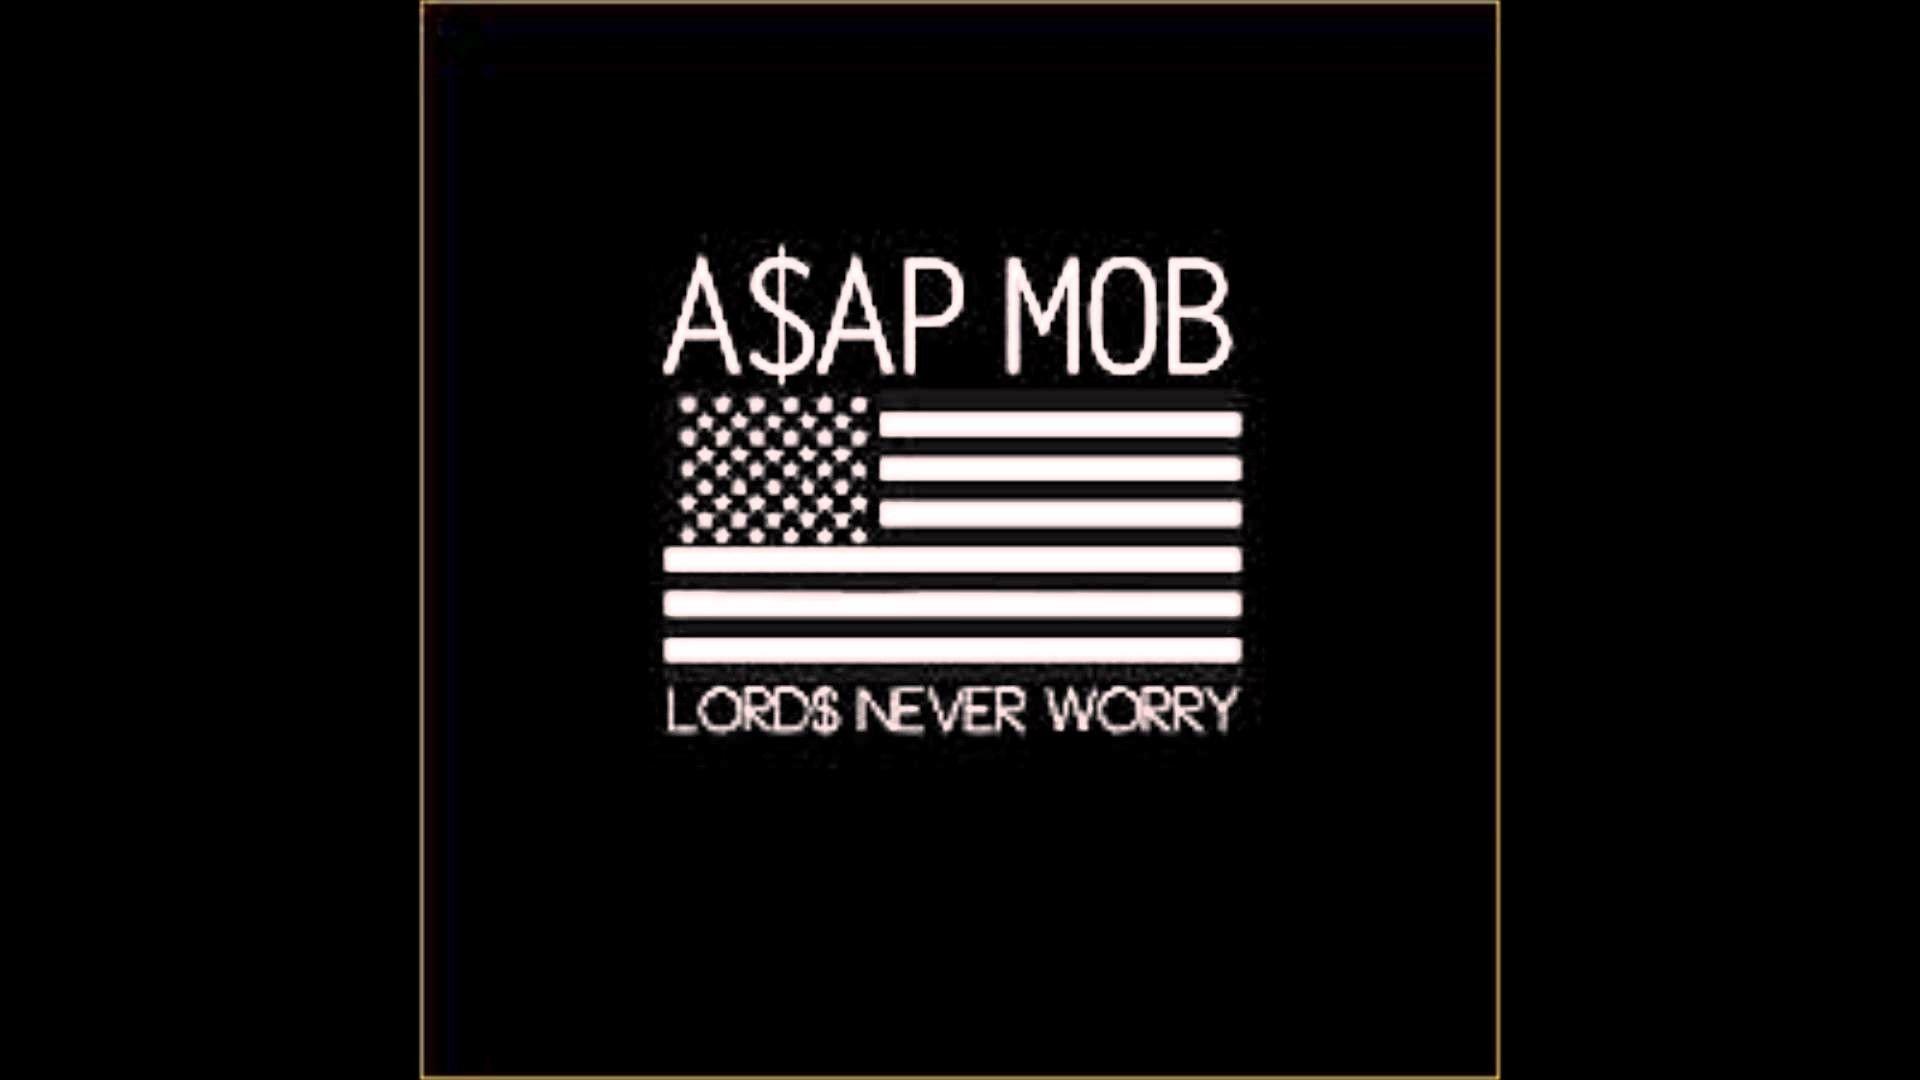 ASAP Mob Logo Wallpapers - Top Free ASAP Mob Logo Backgrounds